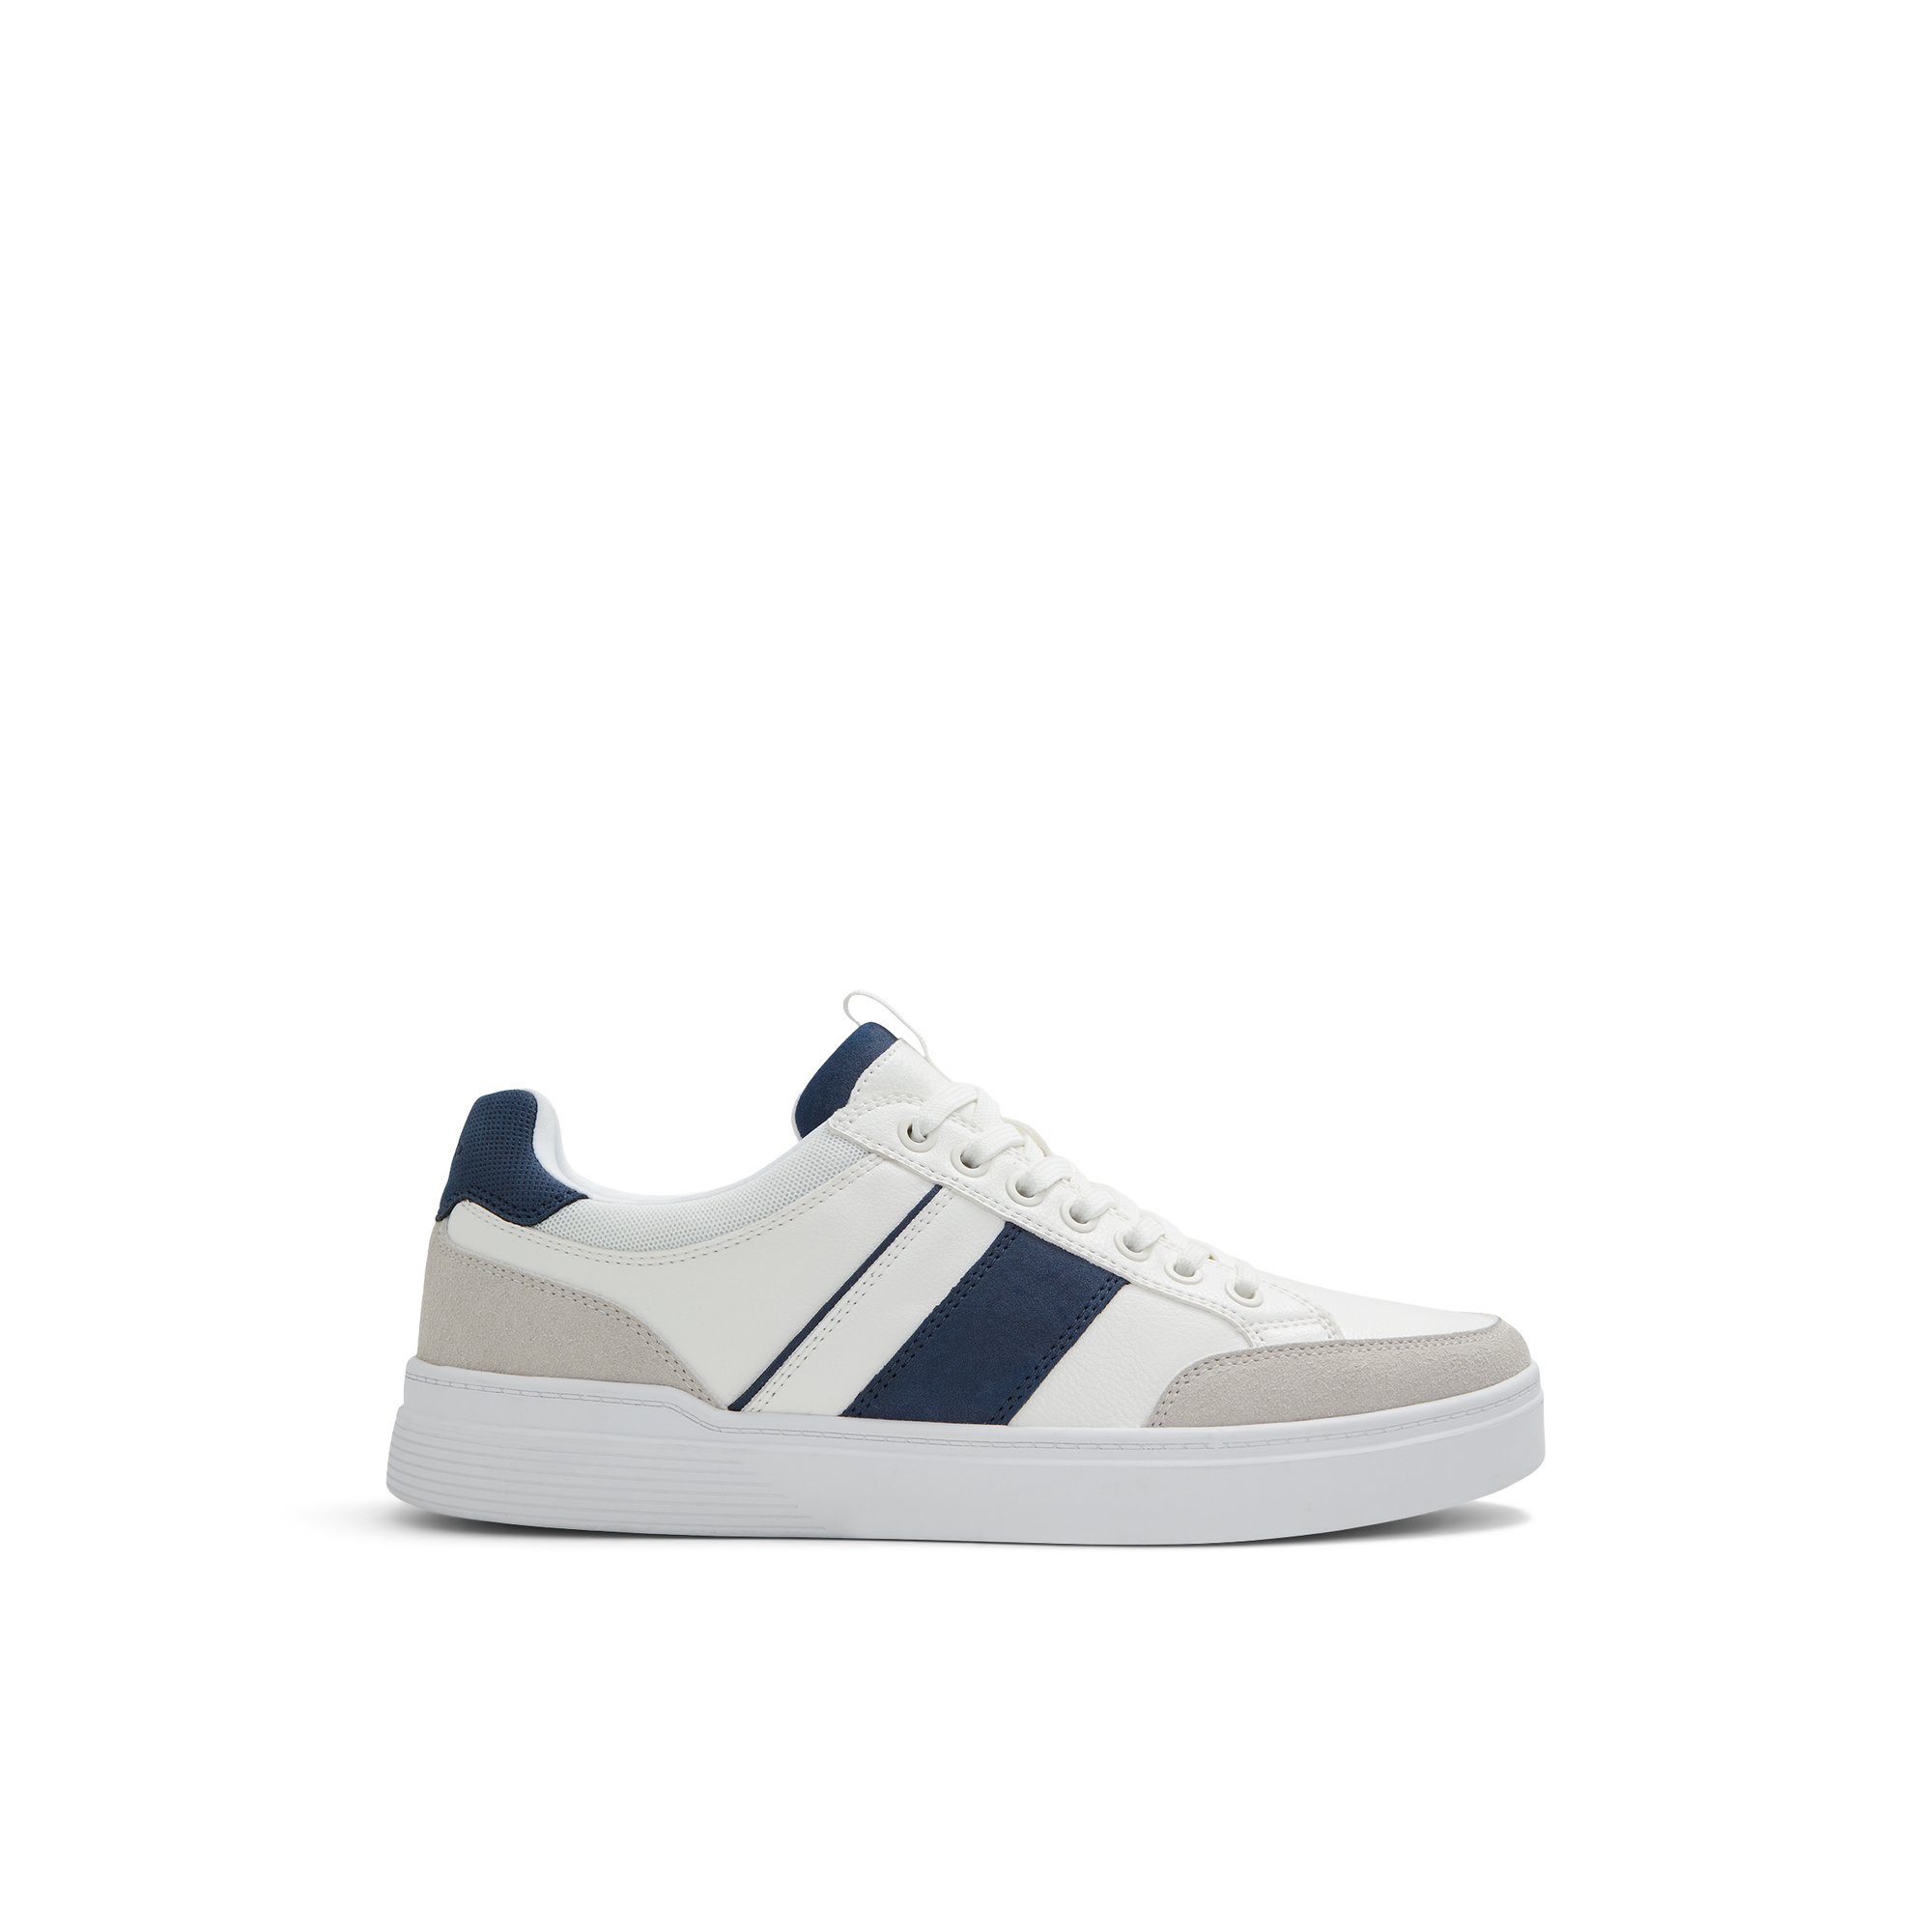 ALDO Elio - Men's Sneakers Low Top - White